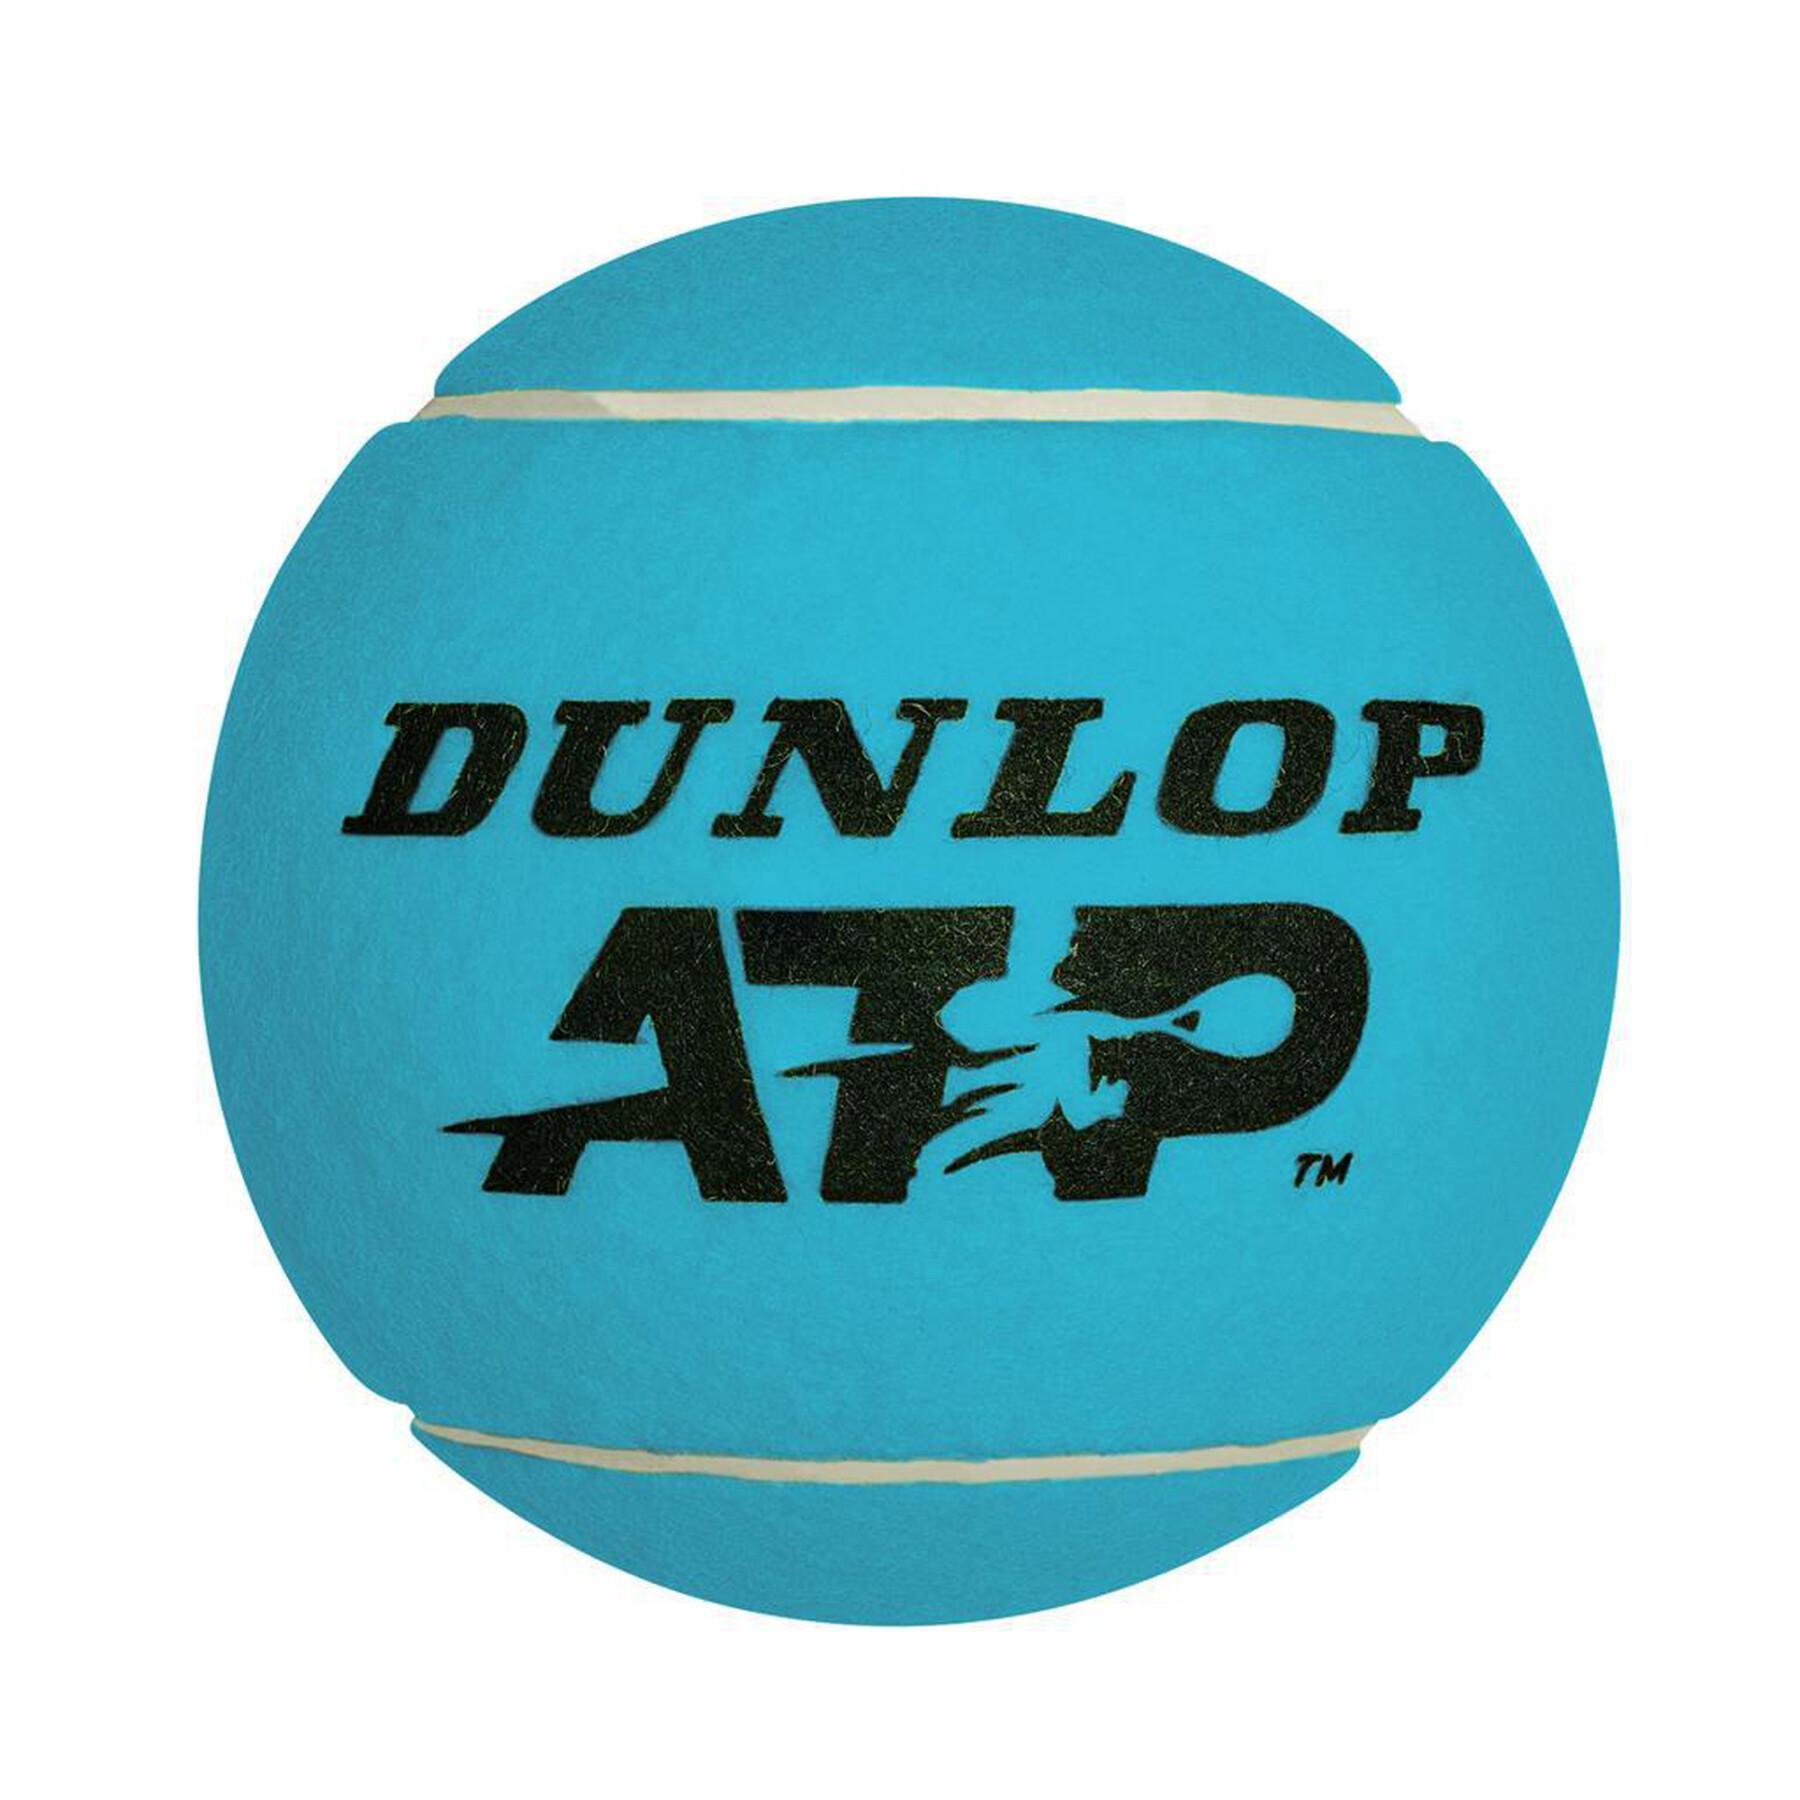 Pelota de tenis gigante Dunlop